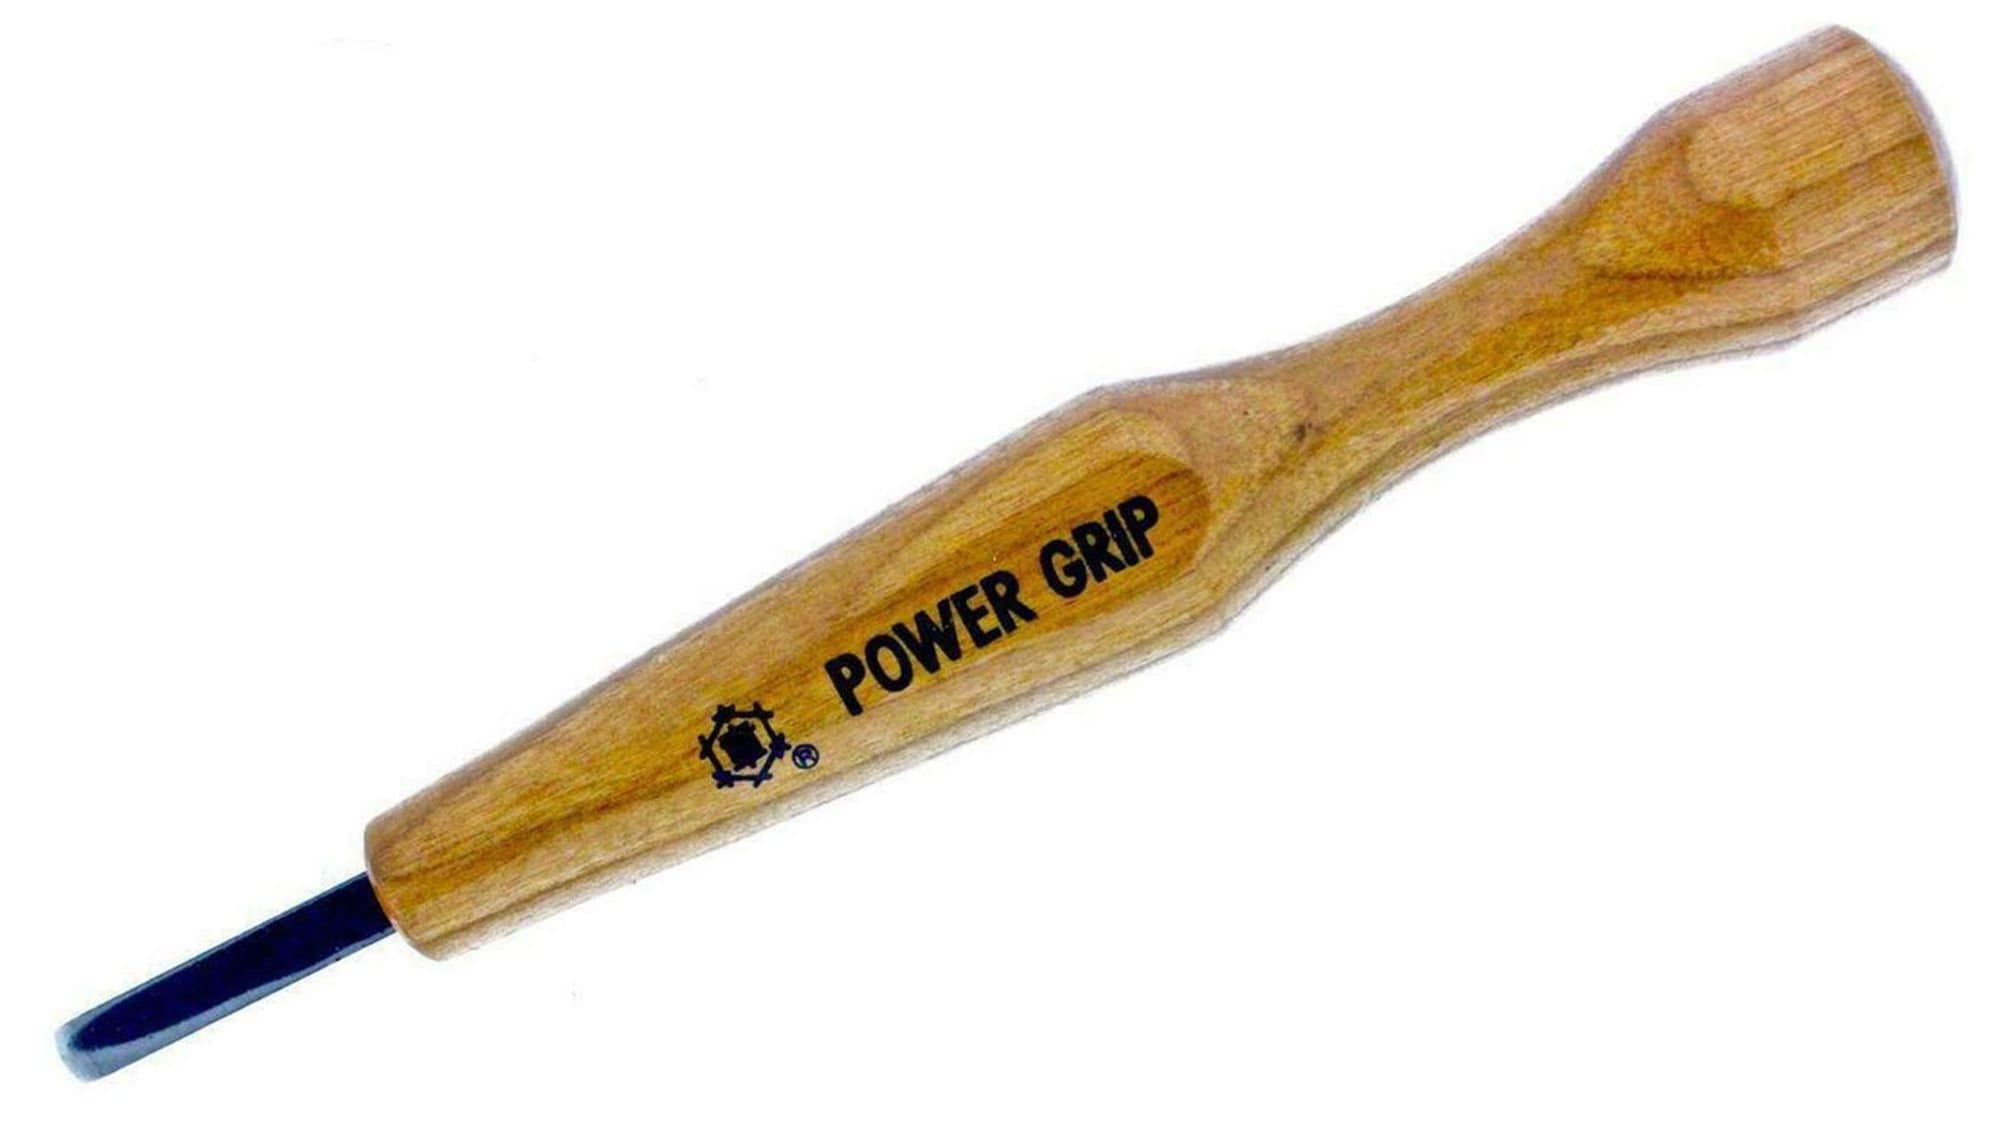 Chokokuto Power Grip Carving Tool Set 